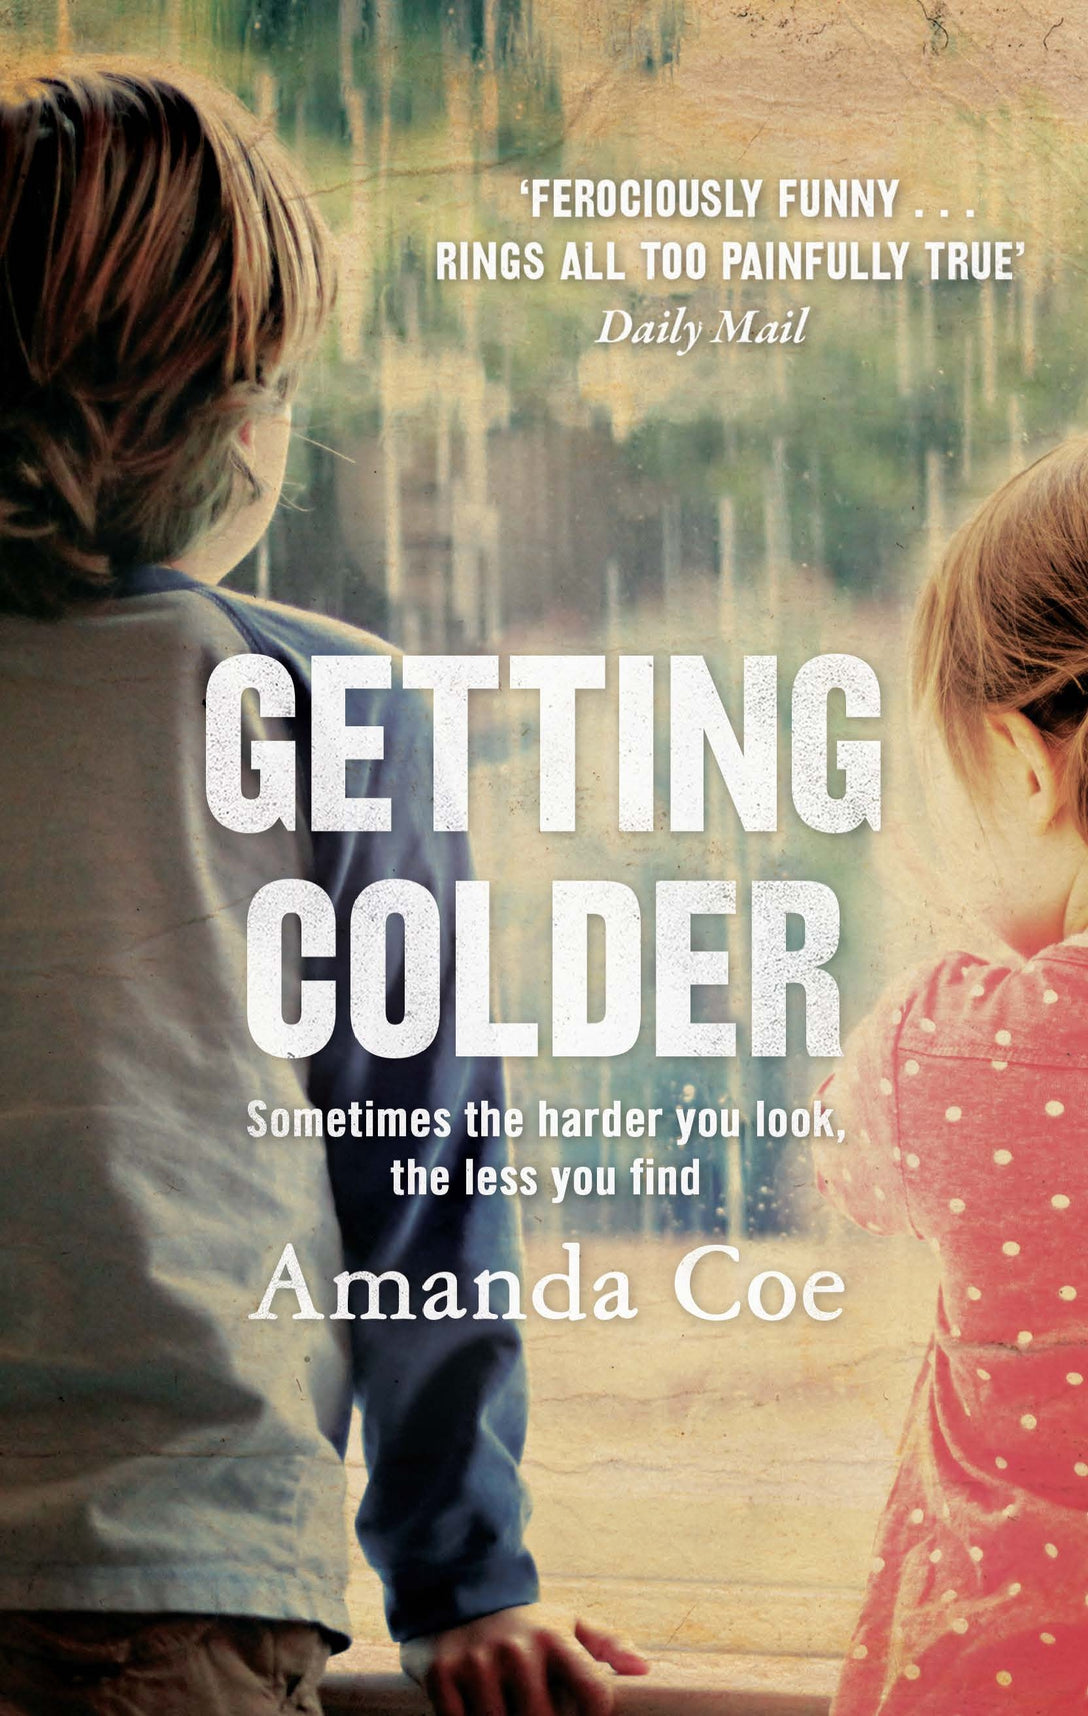 Getting Colder by Amanda Coe